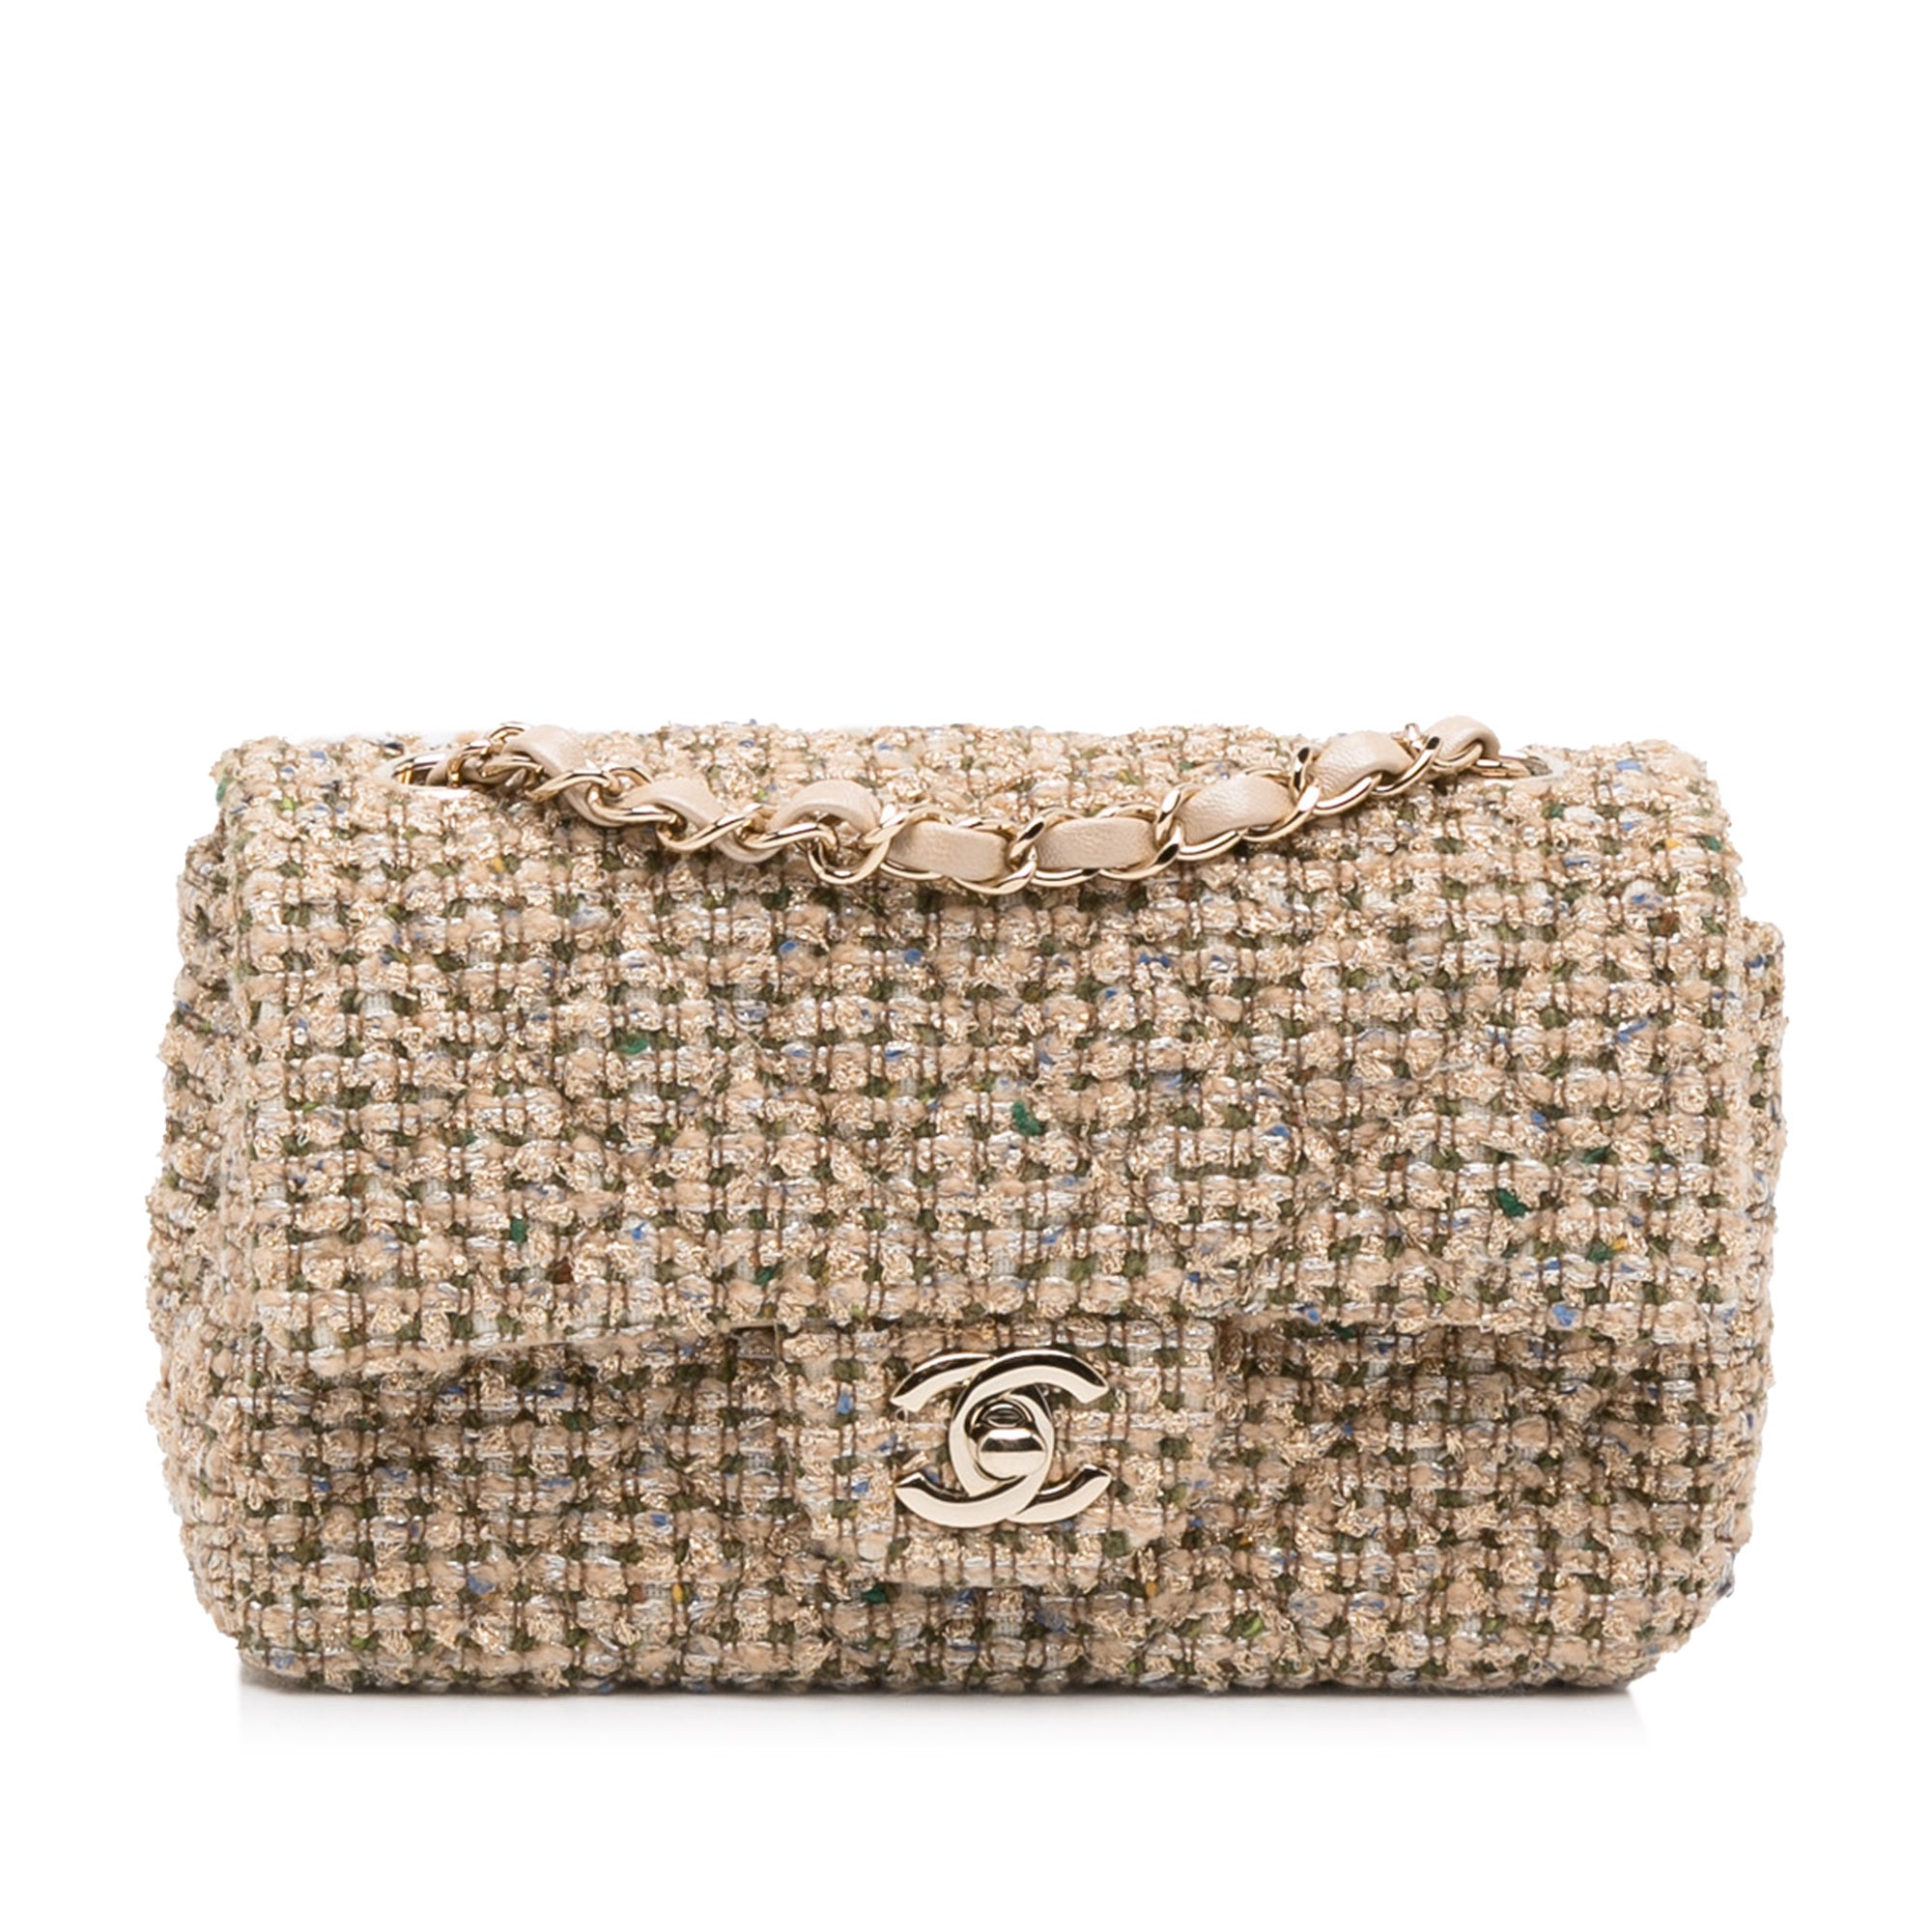 Brown found Chanel Mini Tweed bolsito Crossbody Bag